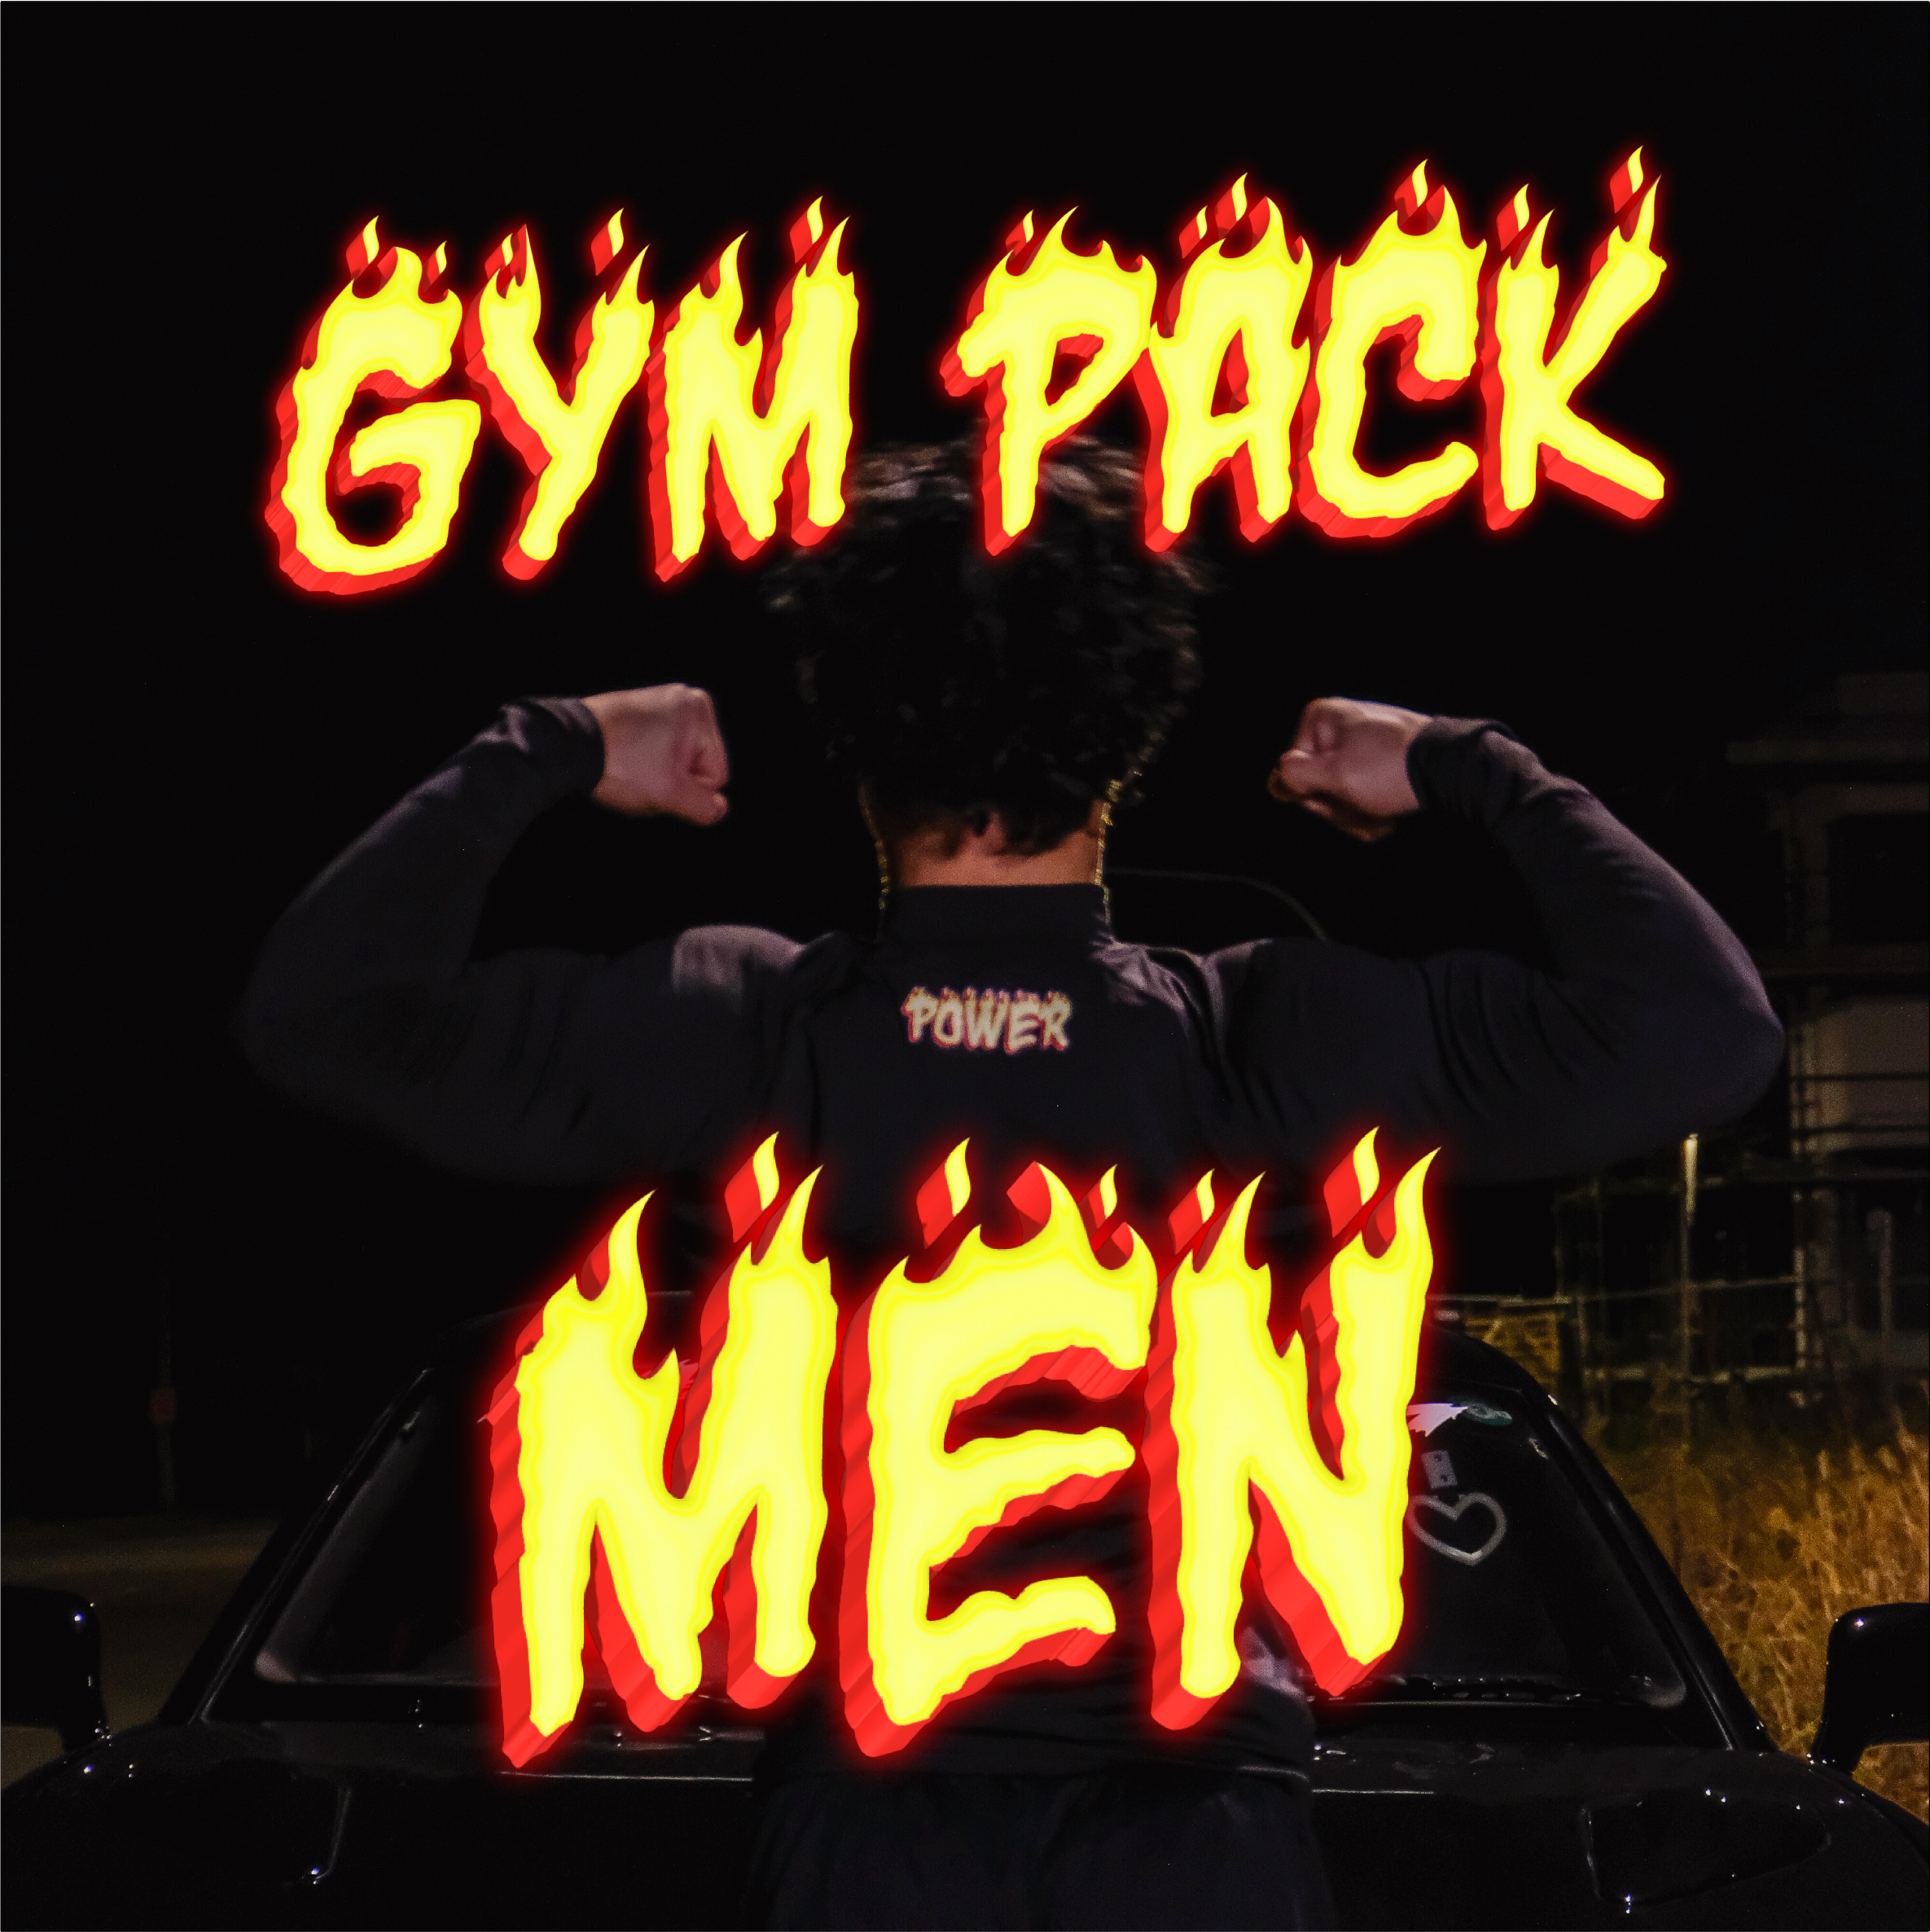 Men's Workout Accessories